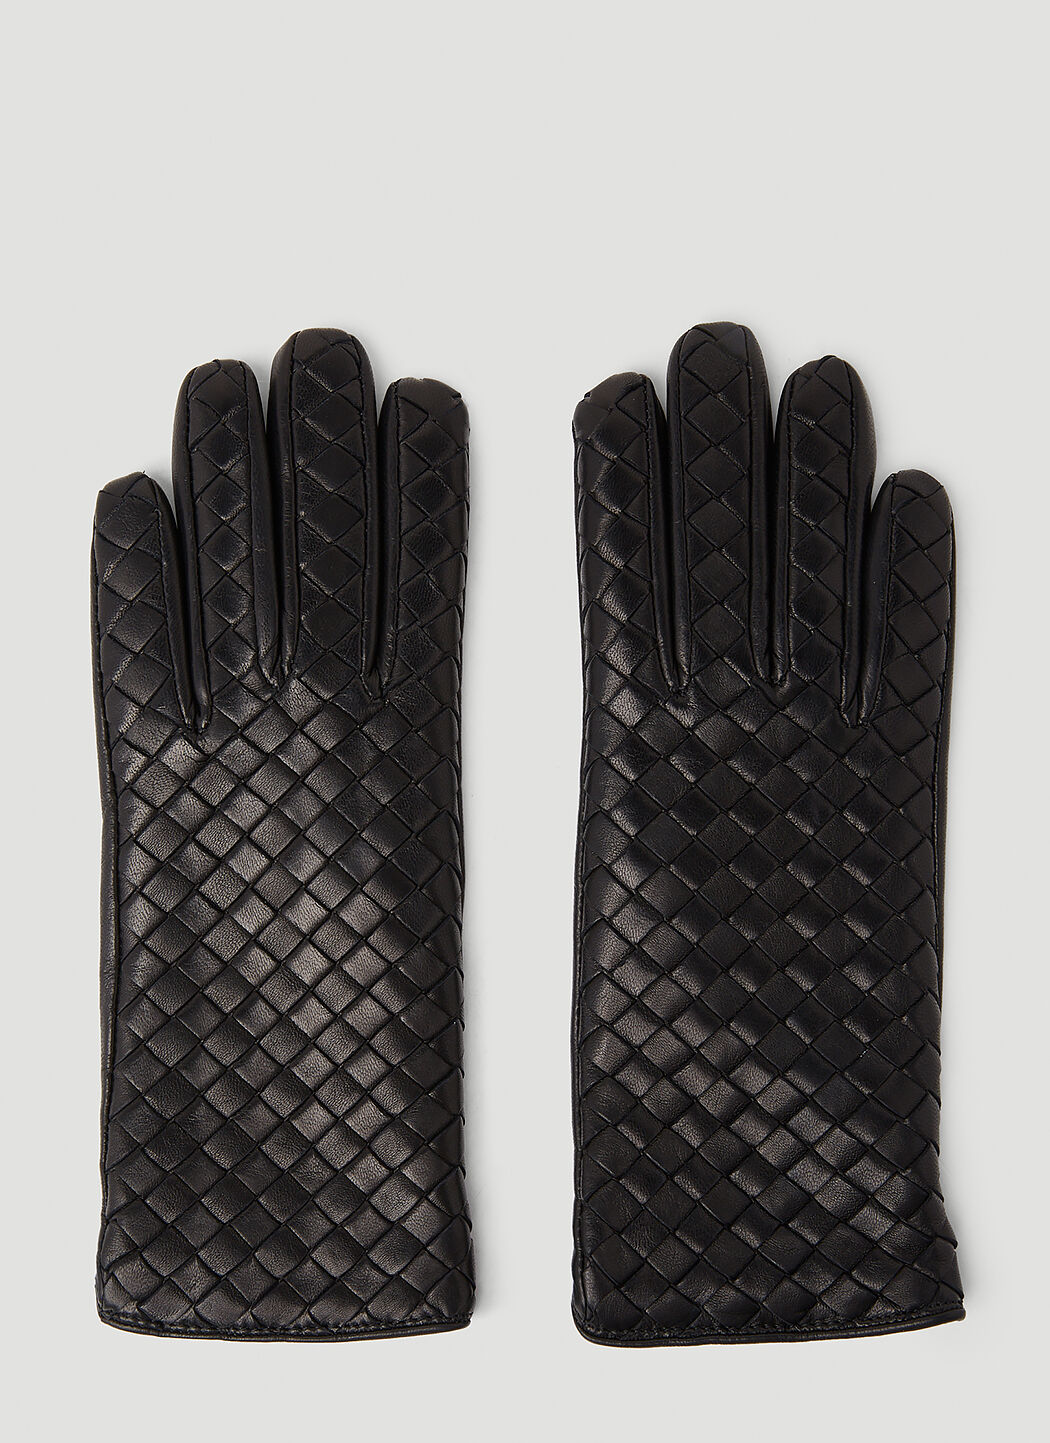 Saint Laurent Intrecciato Leather Gloves Black sla0256031